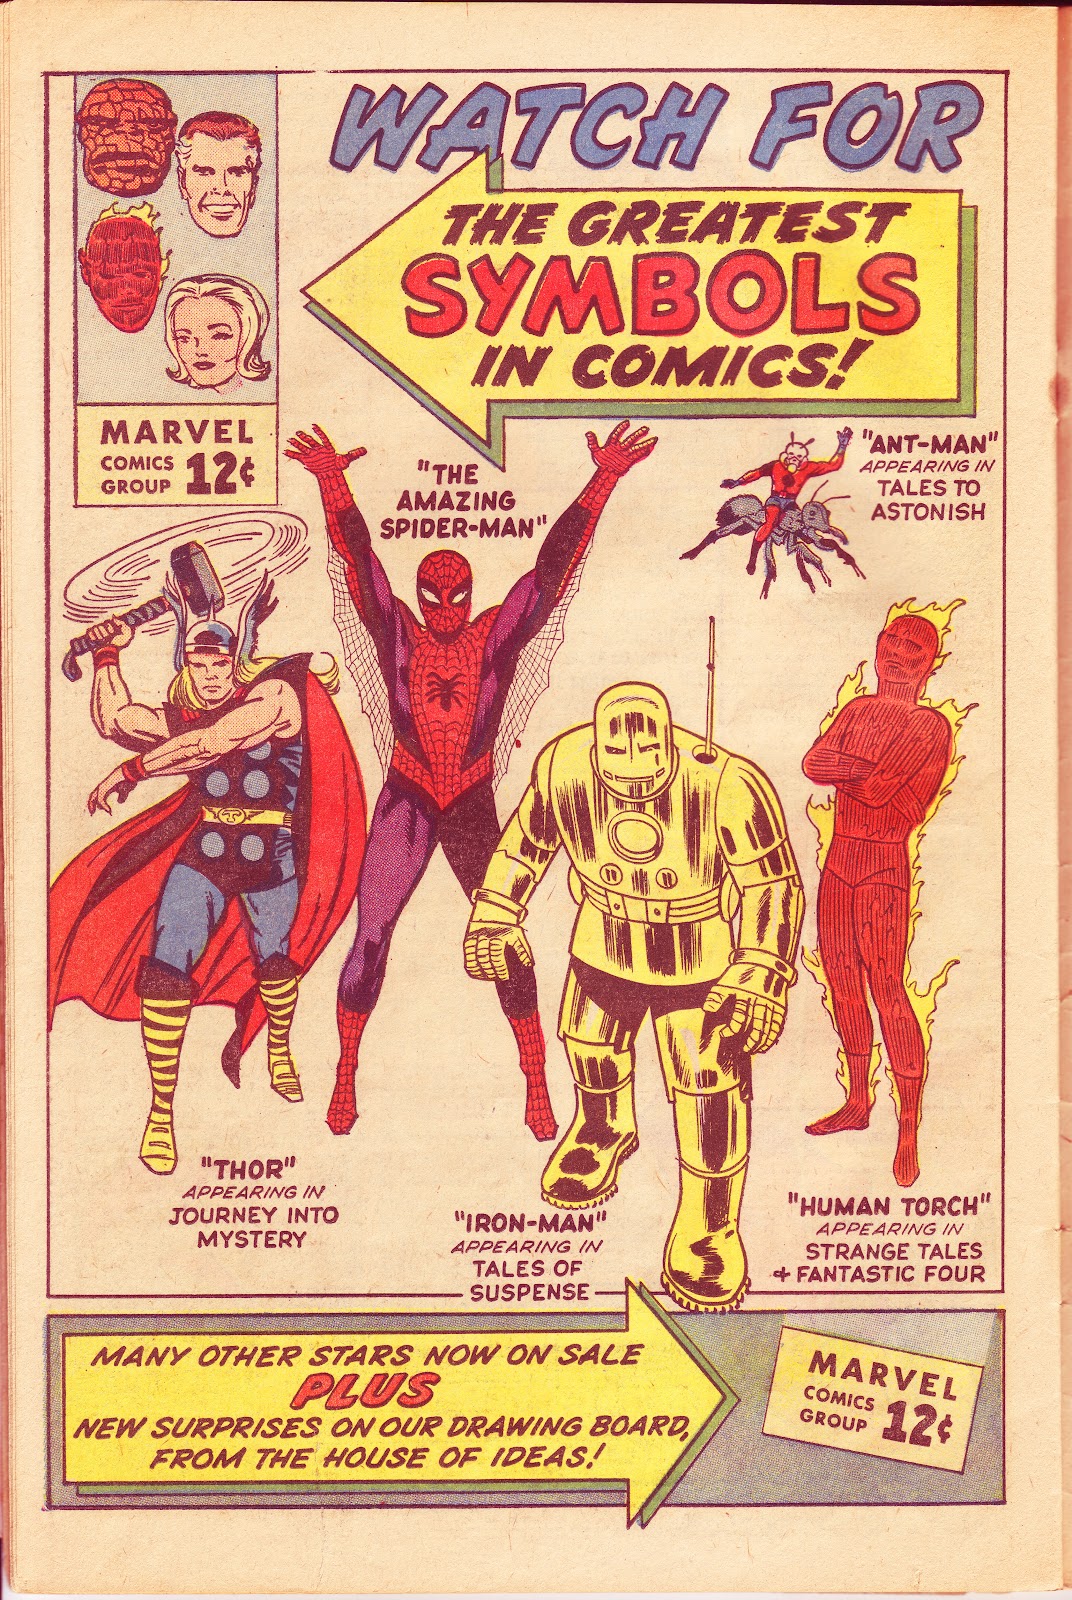 Marvel Mysteries and Comics Minutiae: Early Marvel House Ads